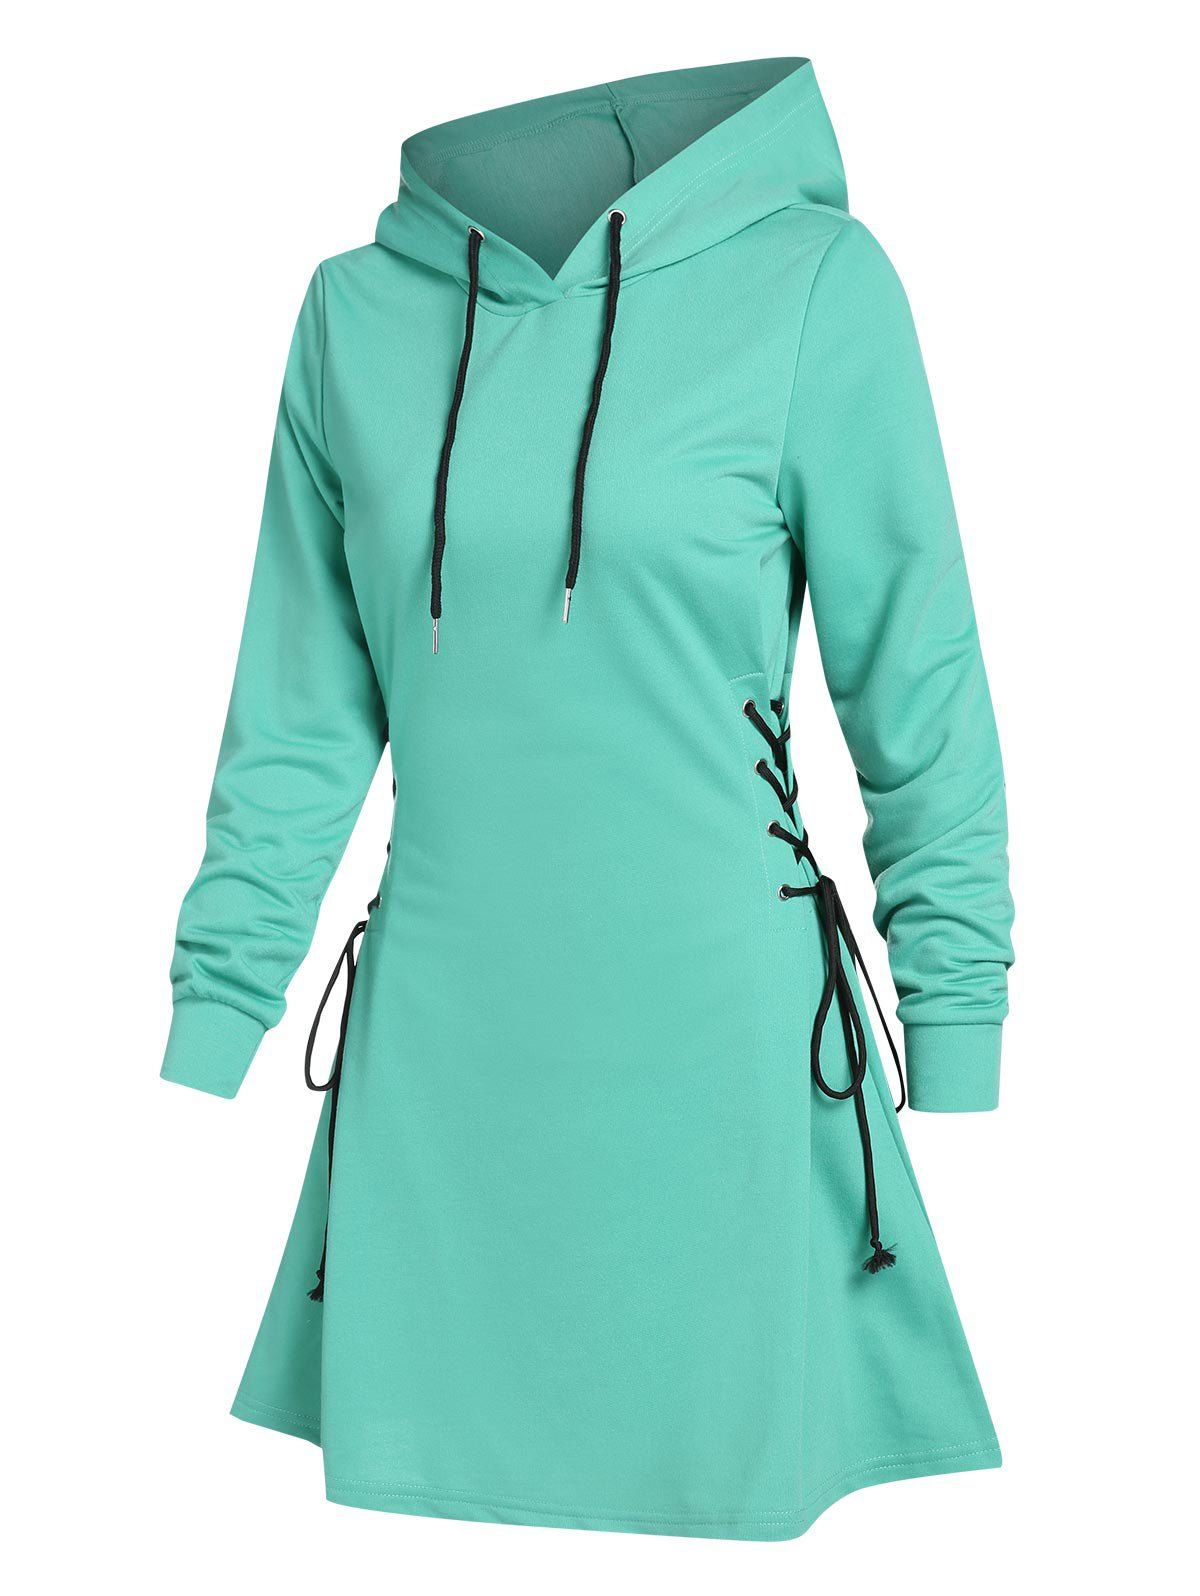 Mini Robe à Capuche à Lacets - Vert clair 2XL